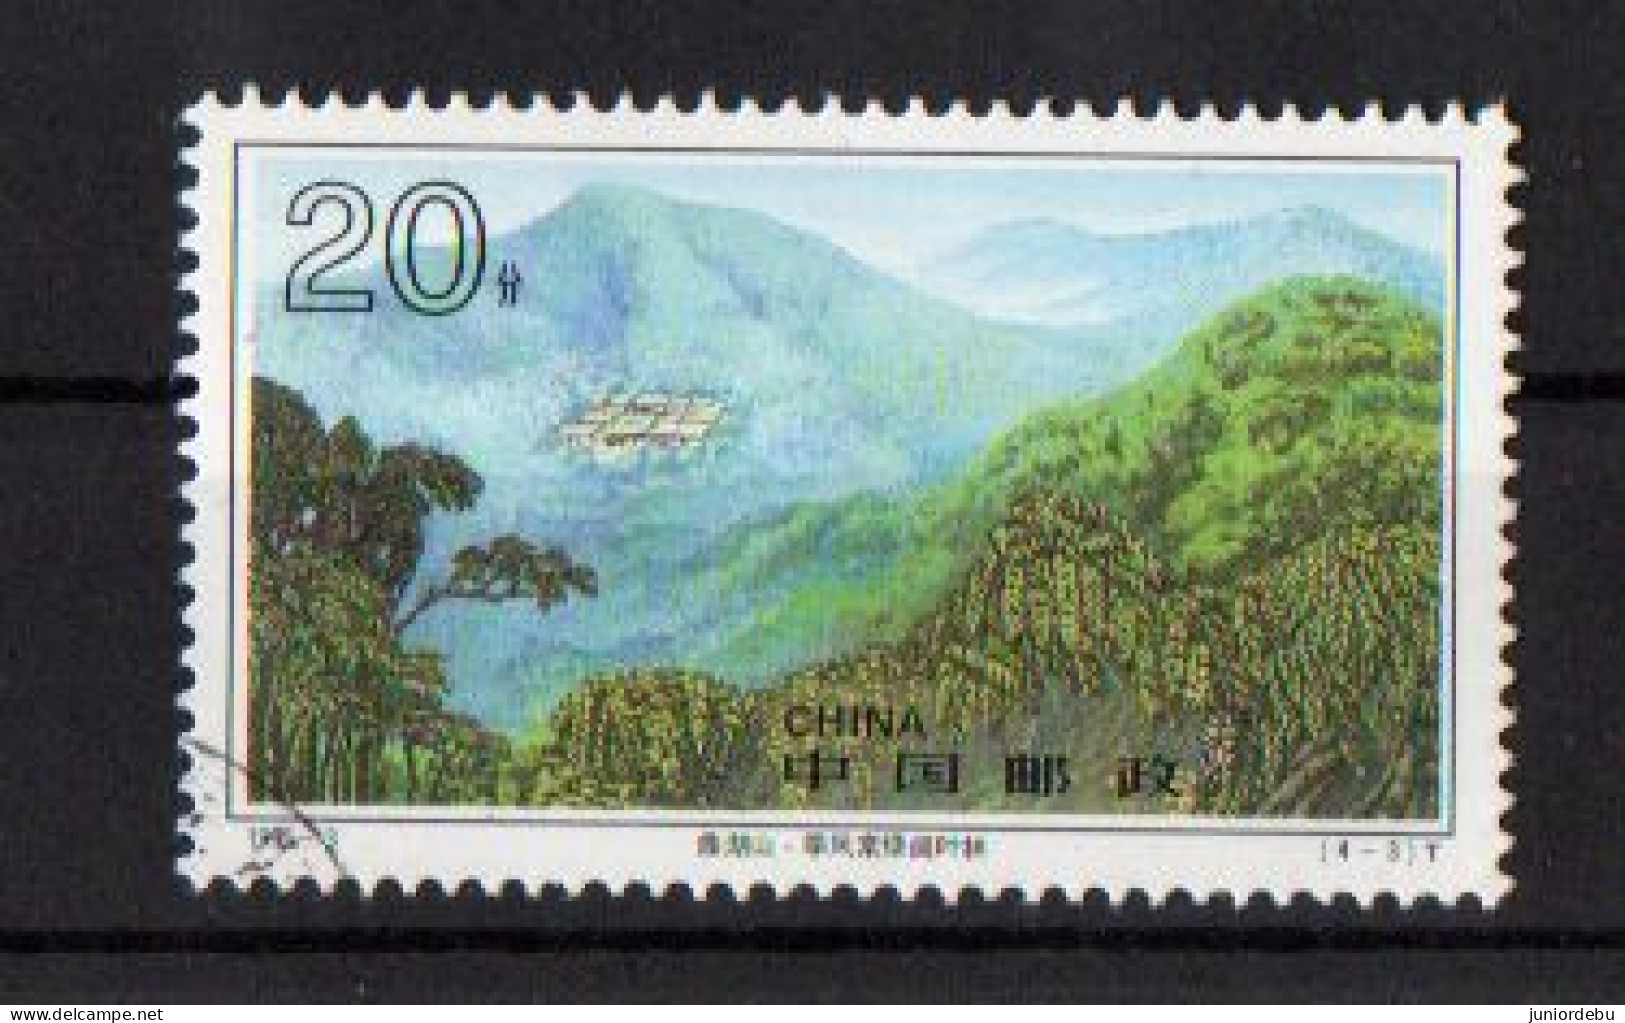 China - 1995 -  Mount Dinghu  - Used. - Gebraucht